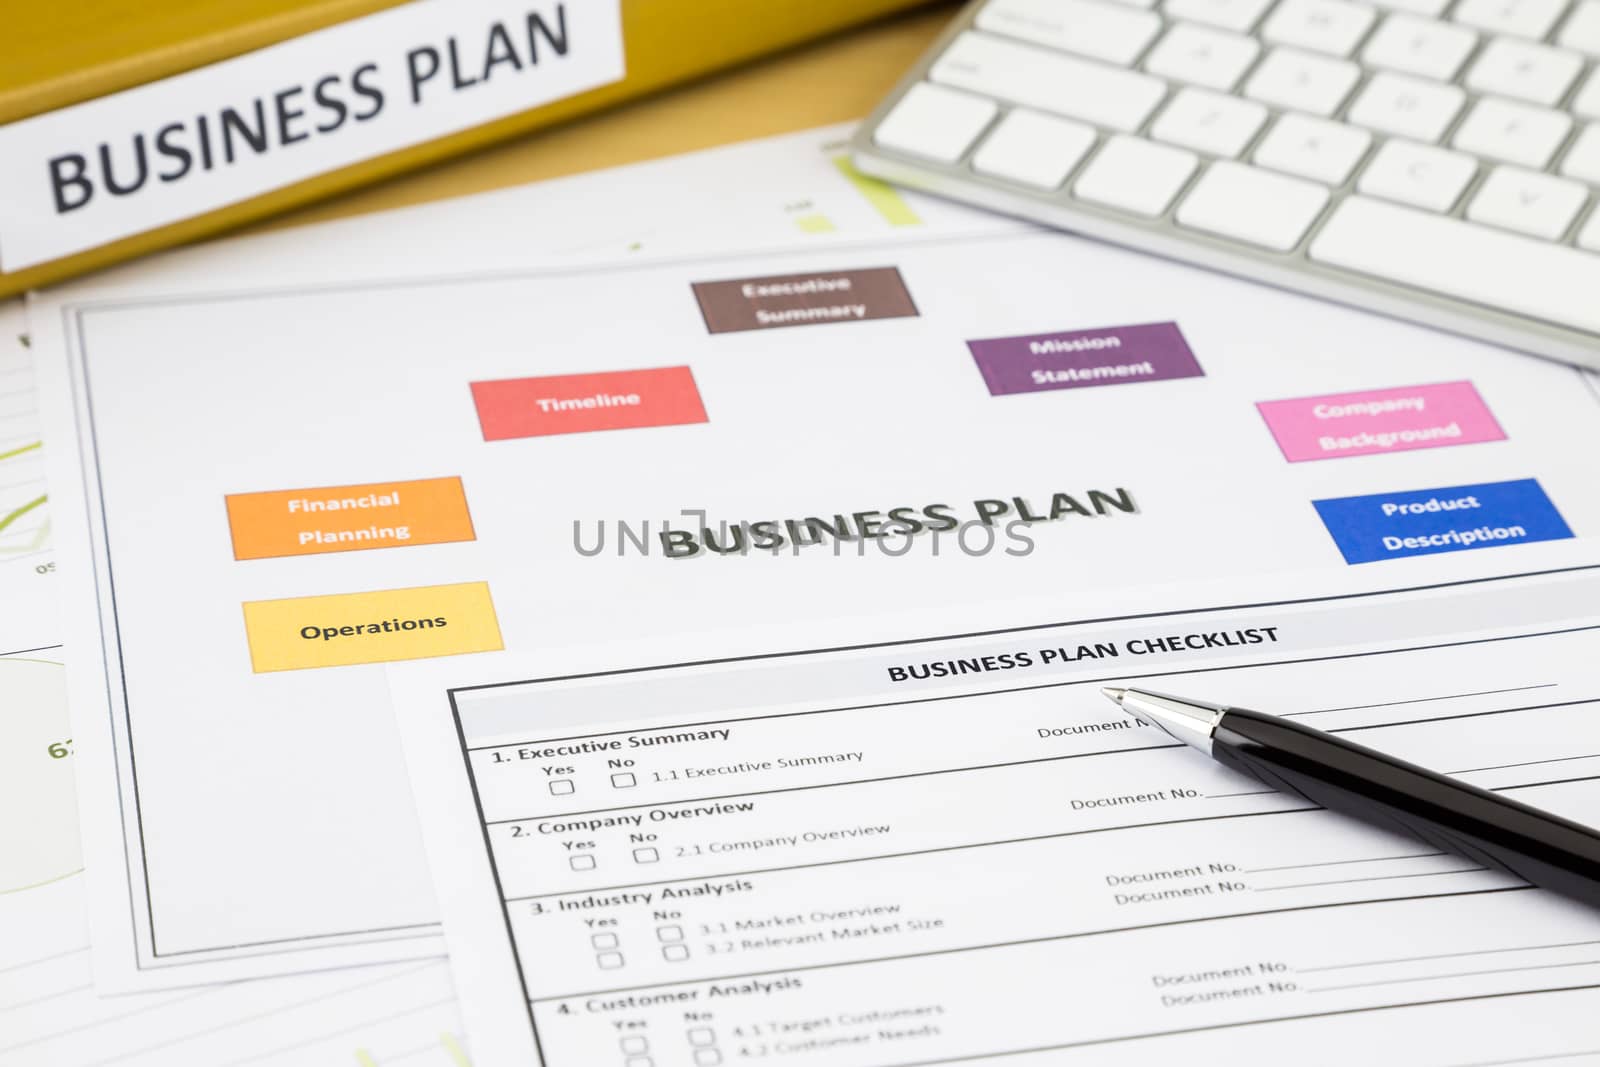 Business plan checklist and paperwork by vinnstock